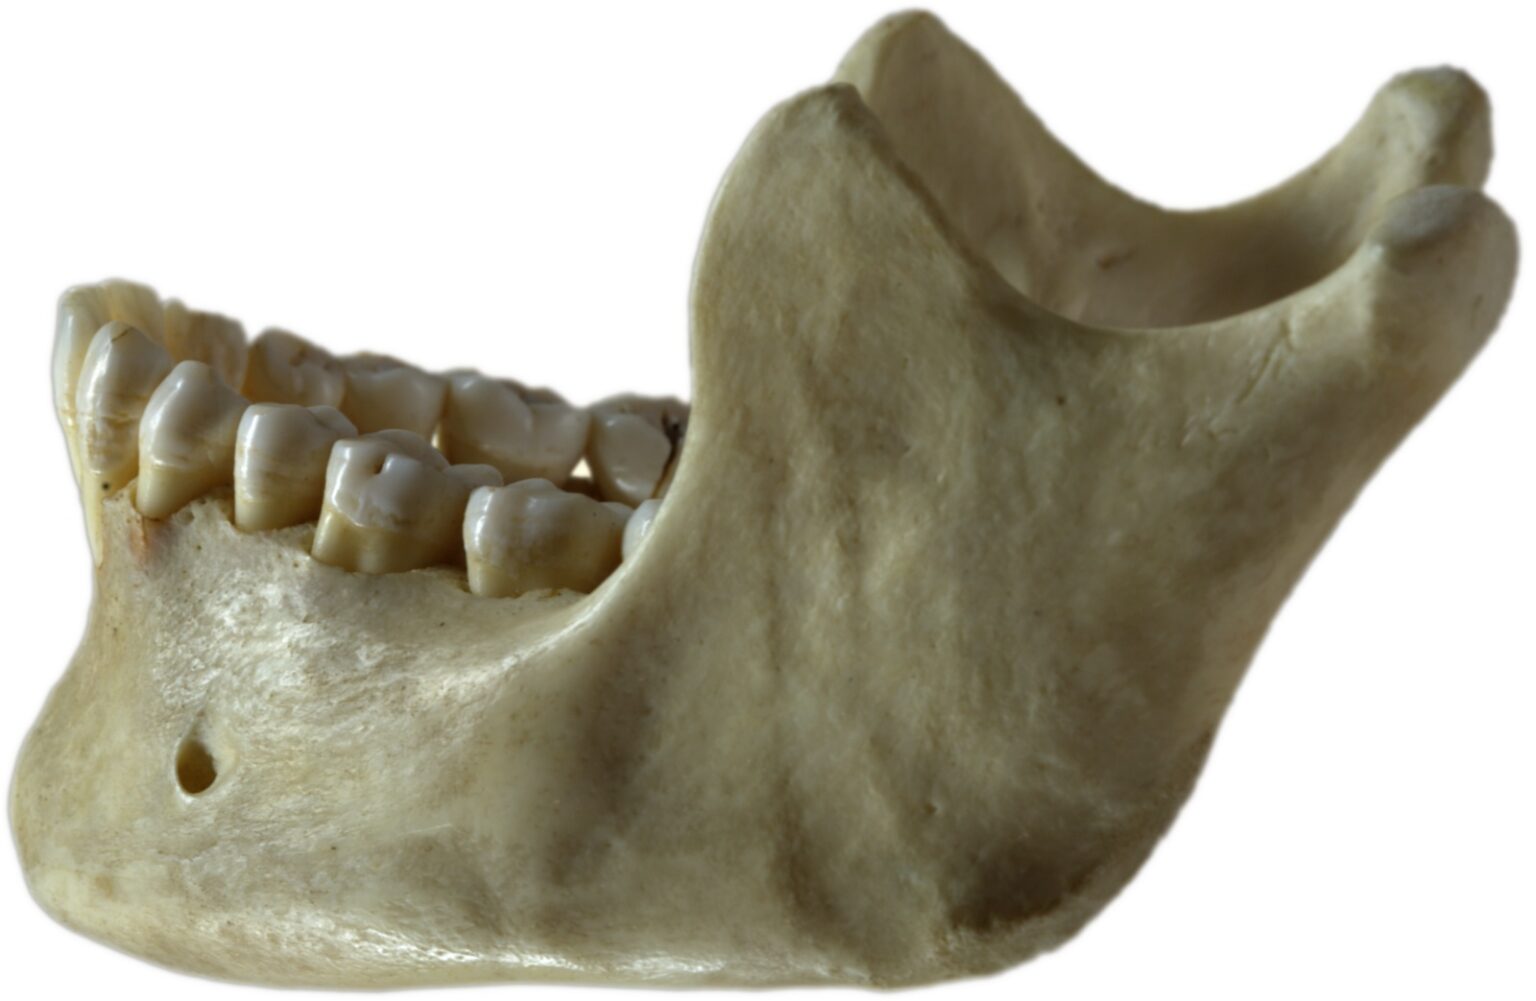 wetaskiwin family dental on jaw bone deterioration